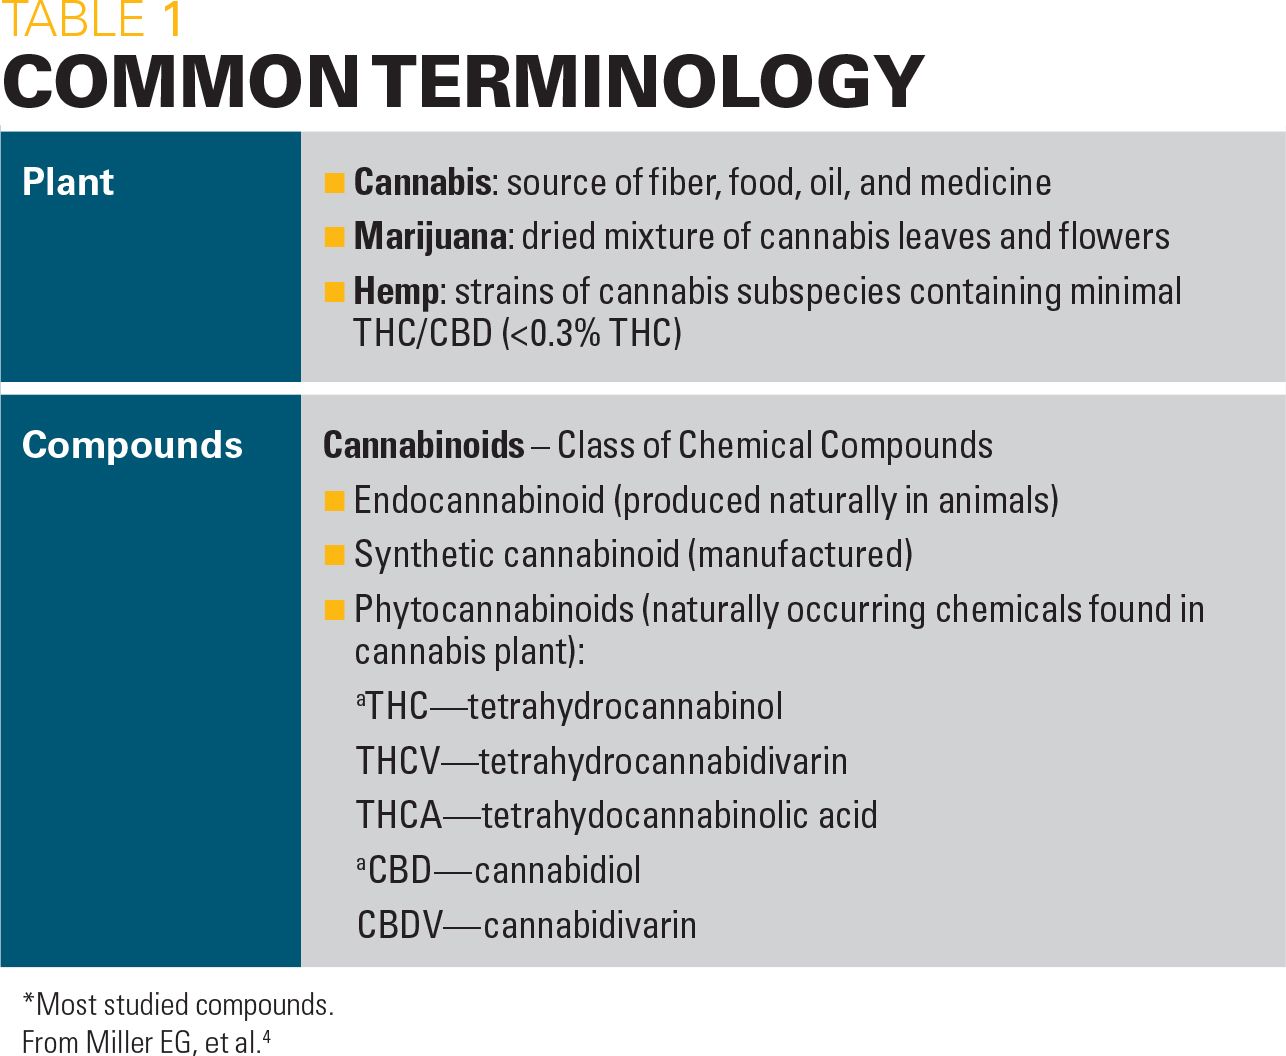 Common terminology for marijuana